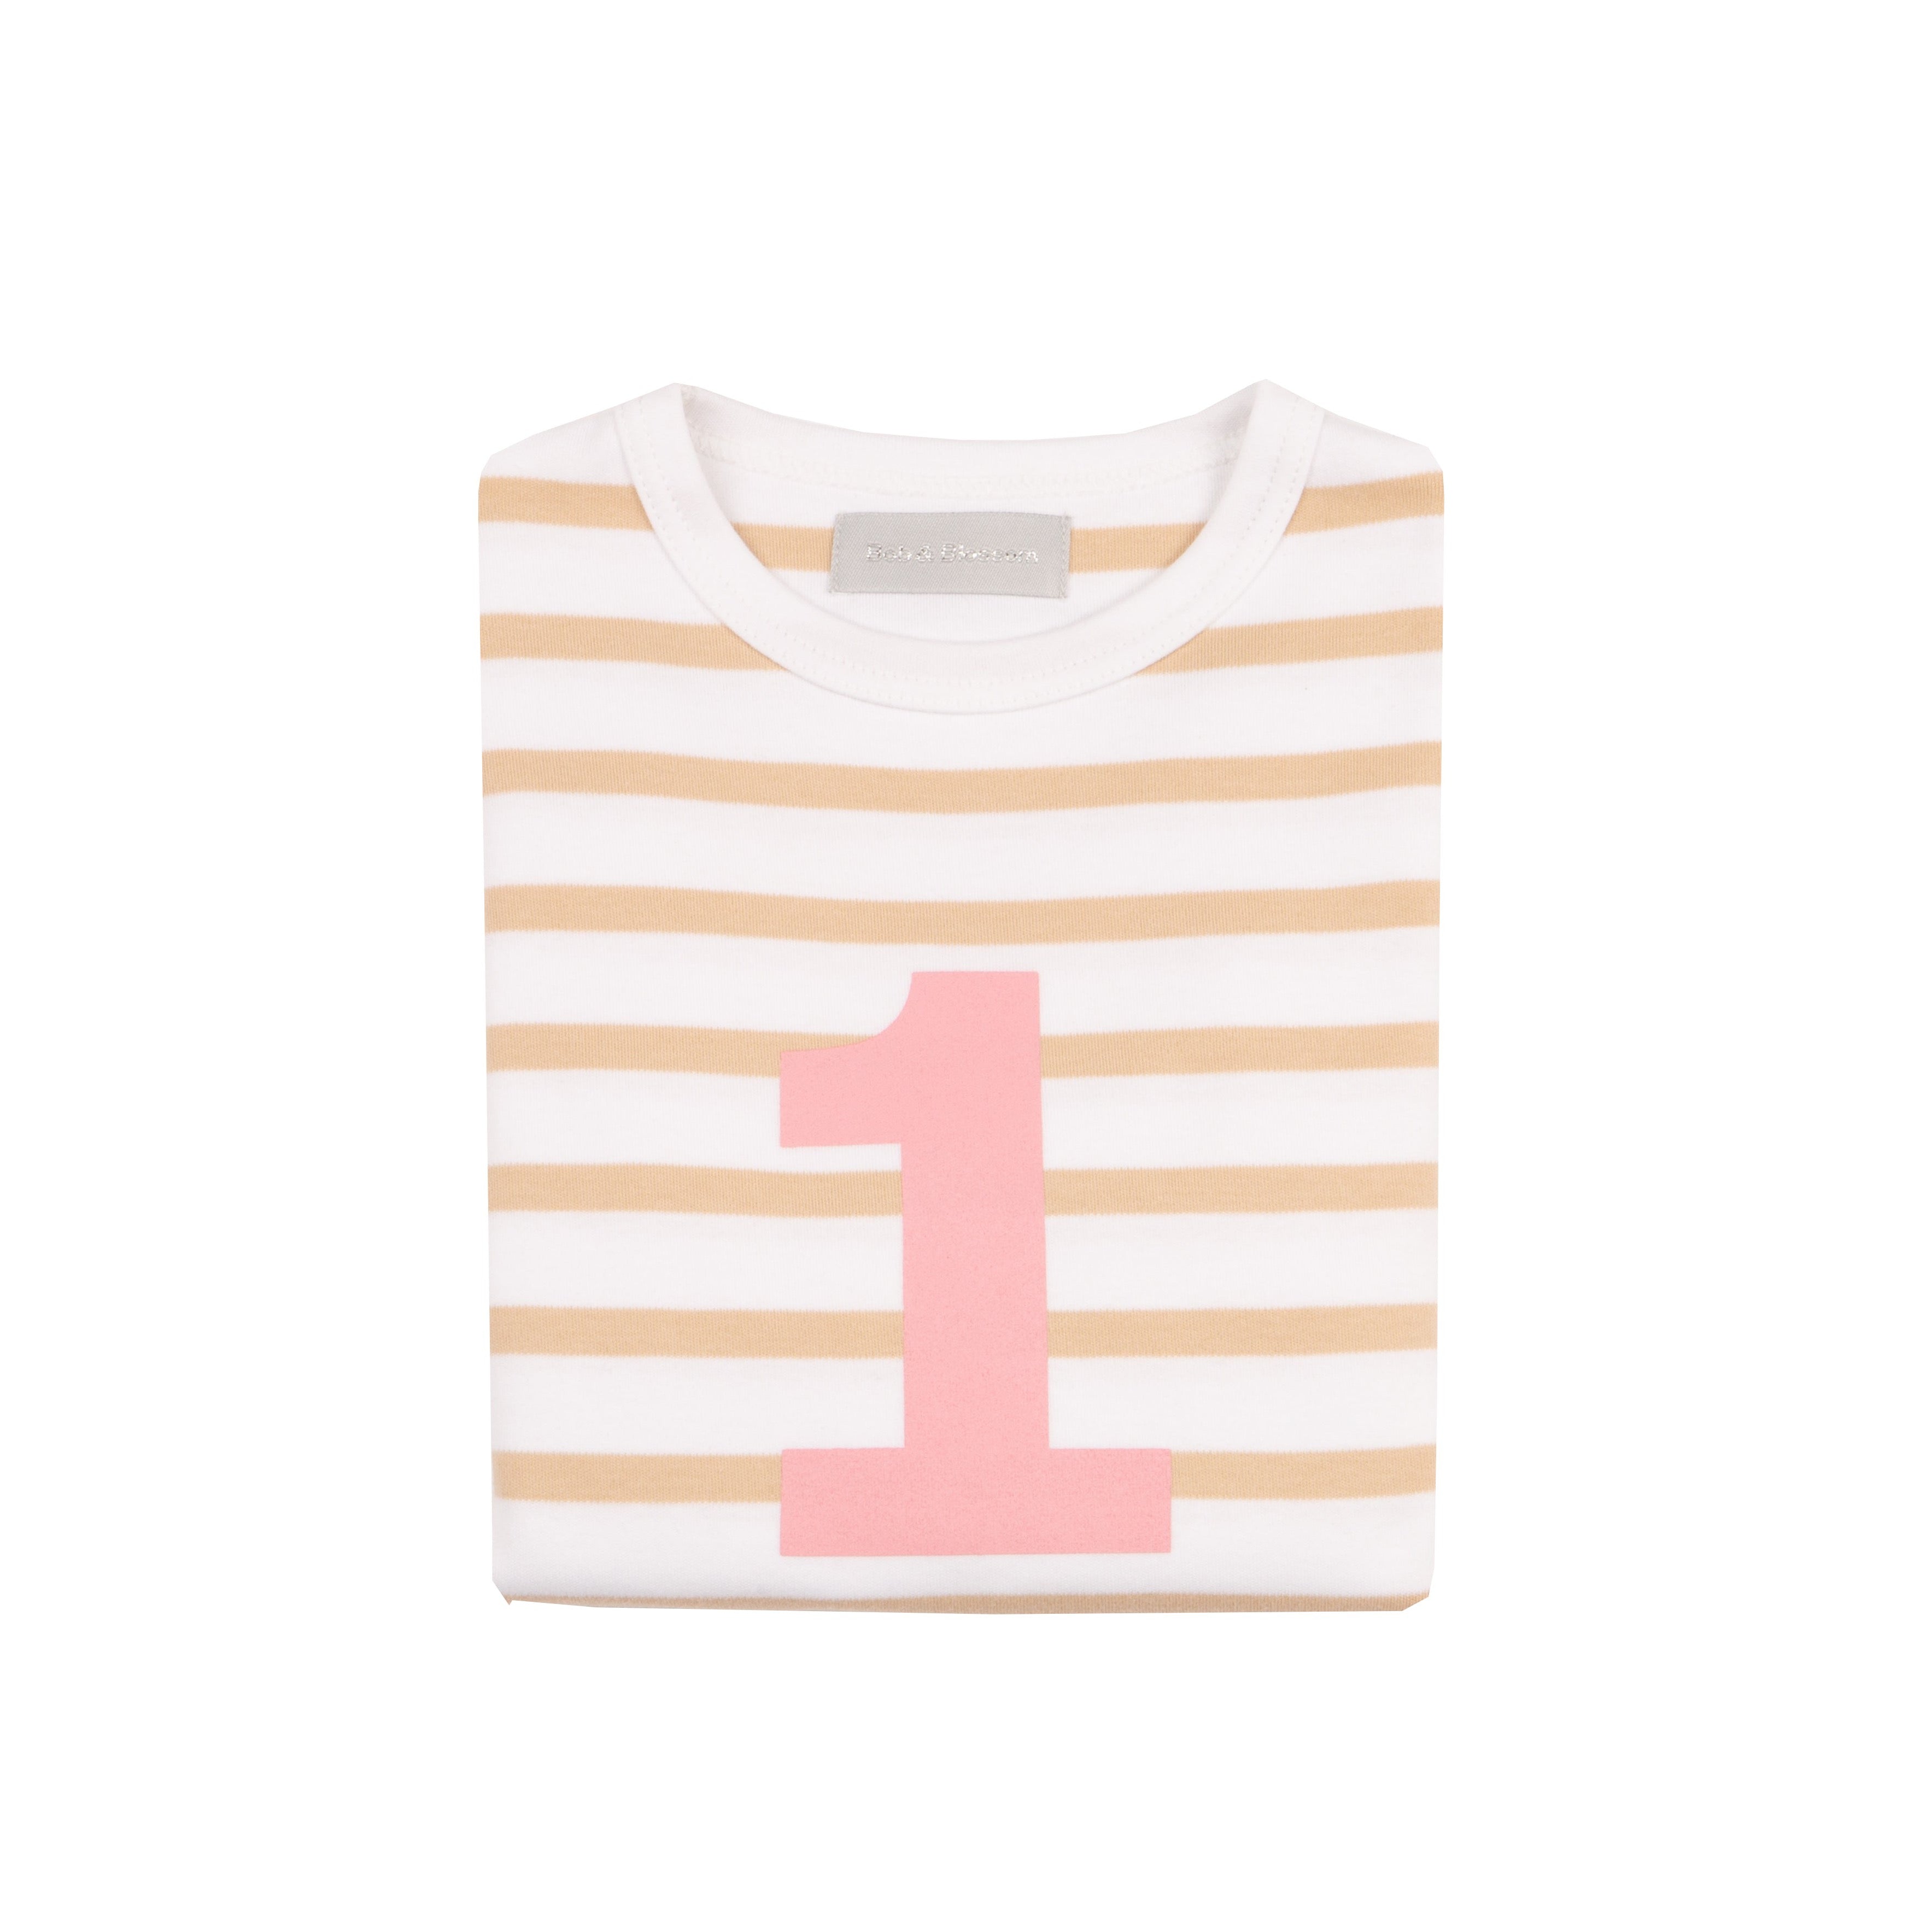 Biscuit & White Breton Striped Number Top (Pink)